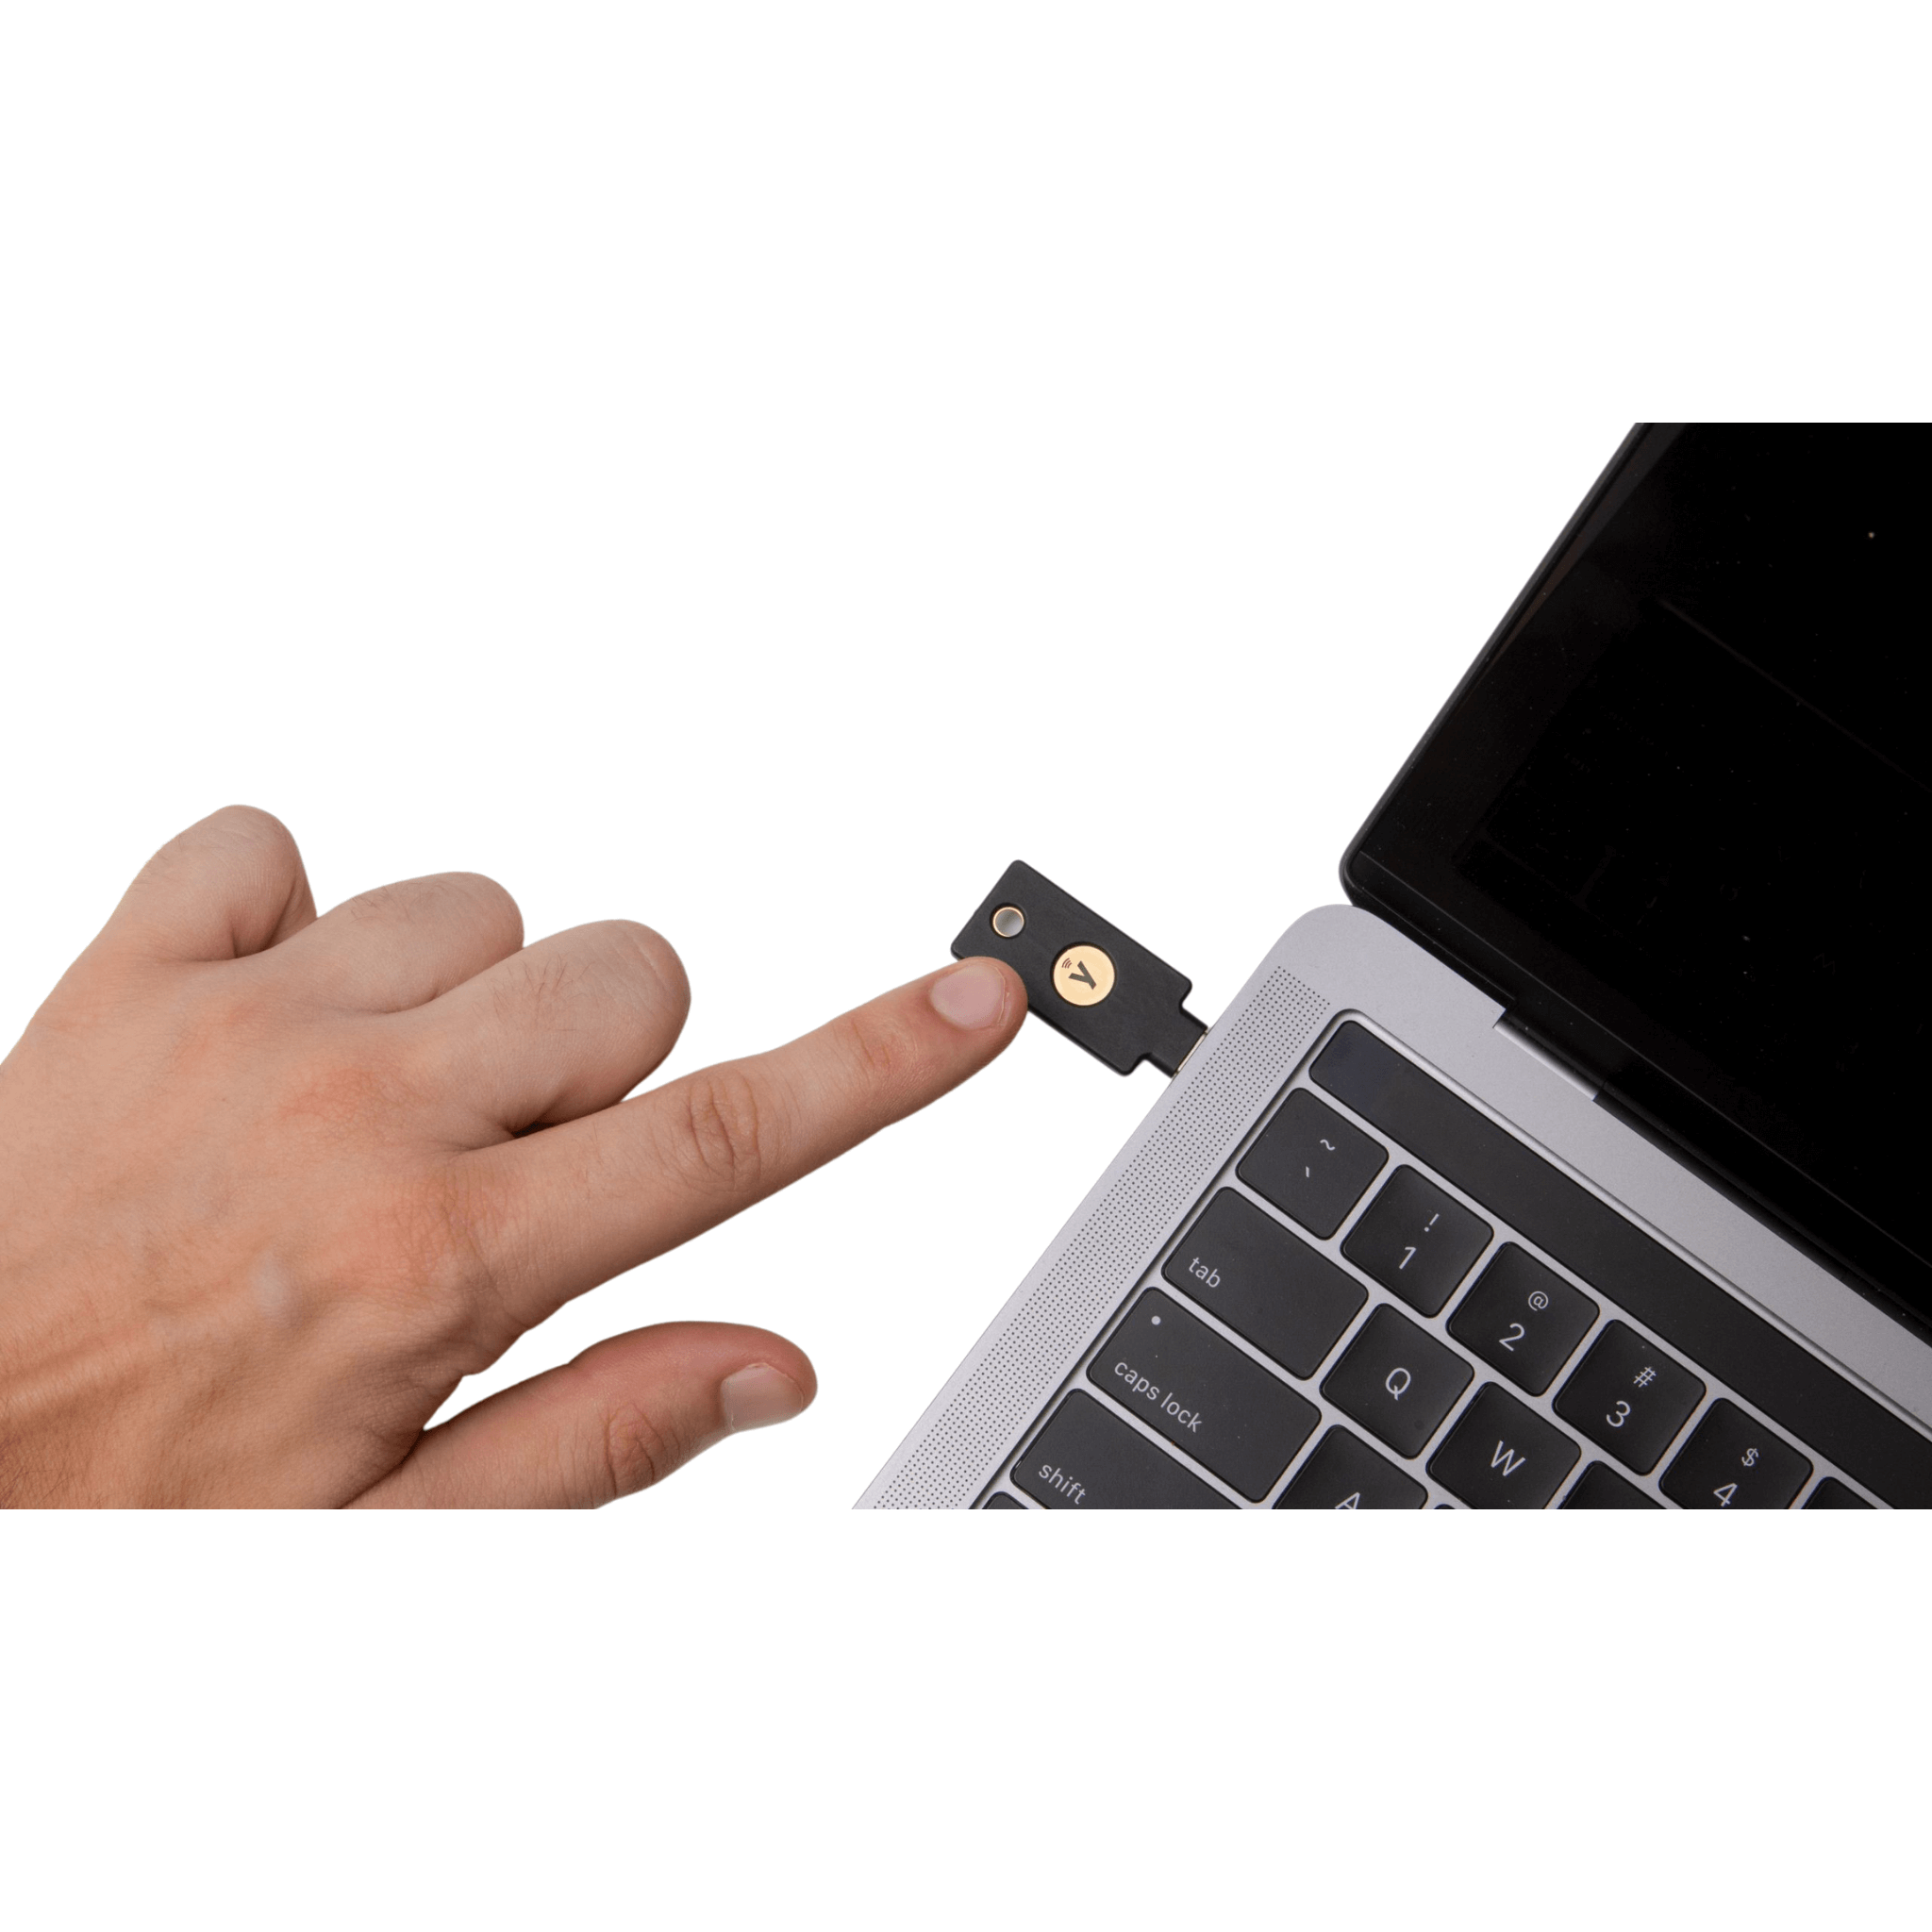 Yubico YubiKey 5C NFC Security Key Plugged Into A Laptop